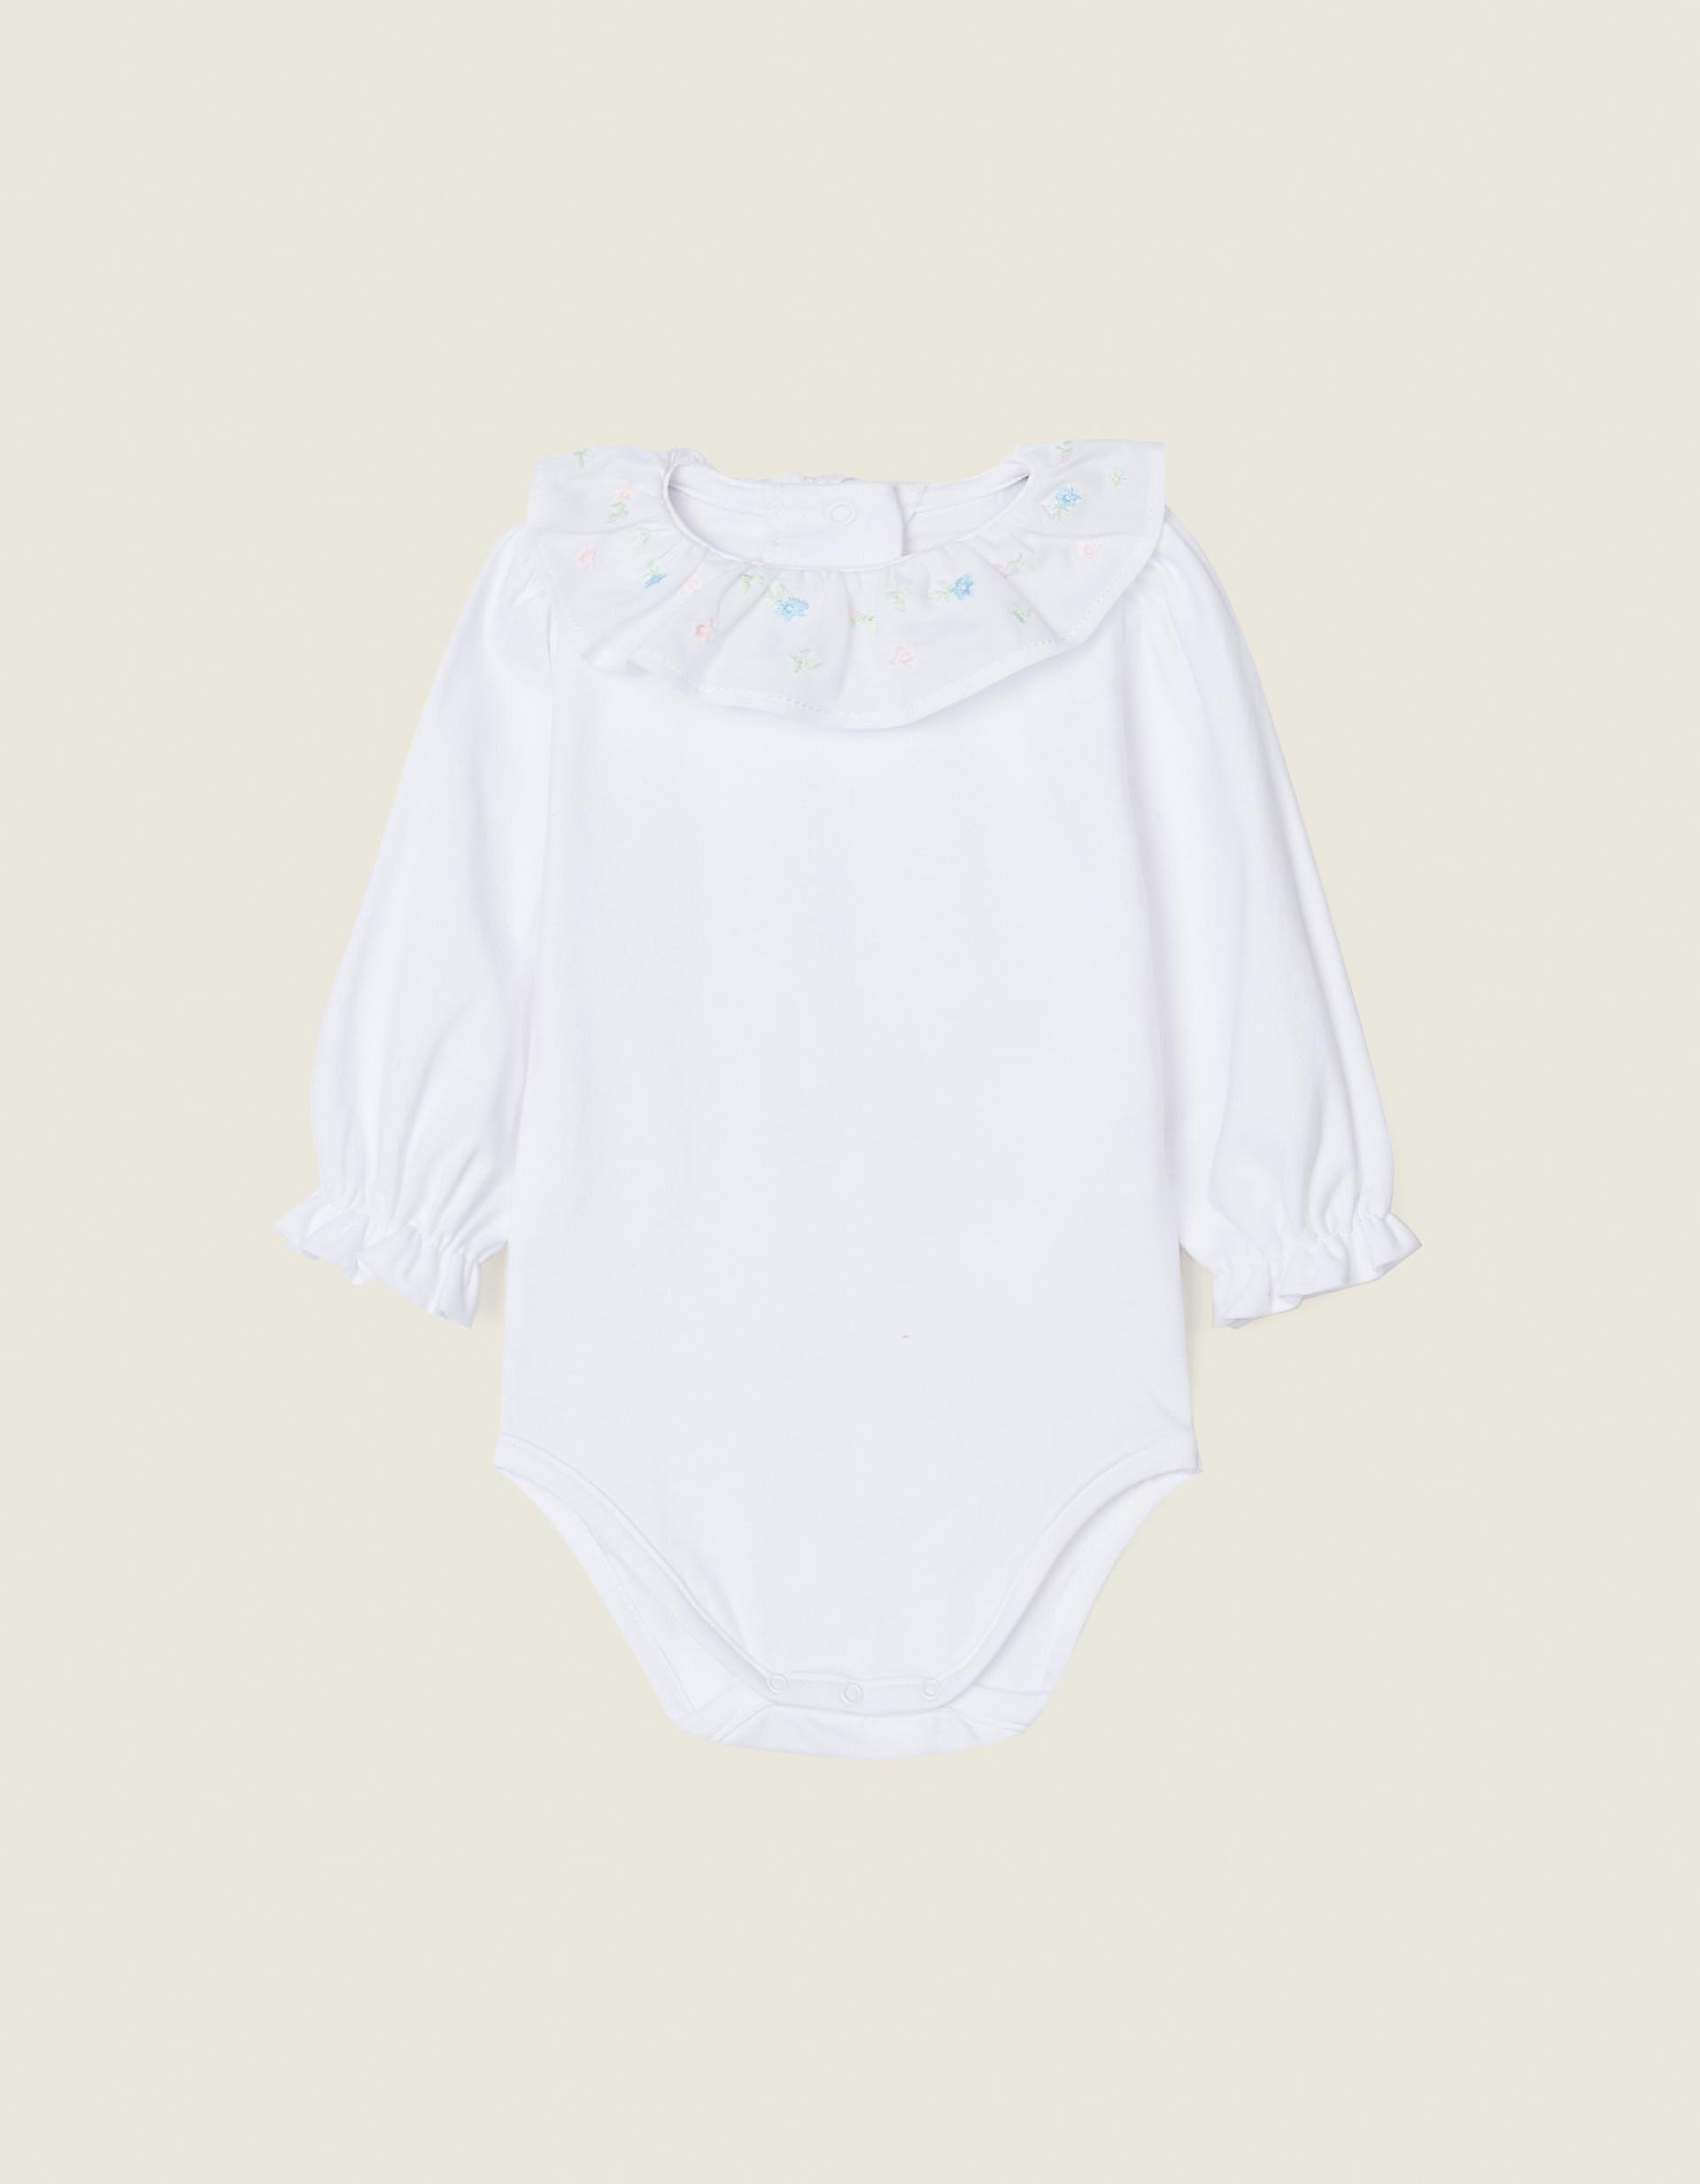 Gant - White Embroidered Bodysuit, Baby Girls